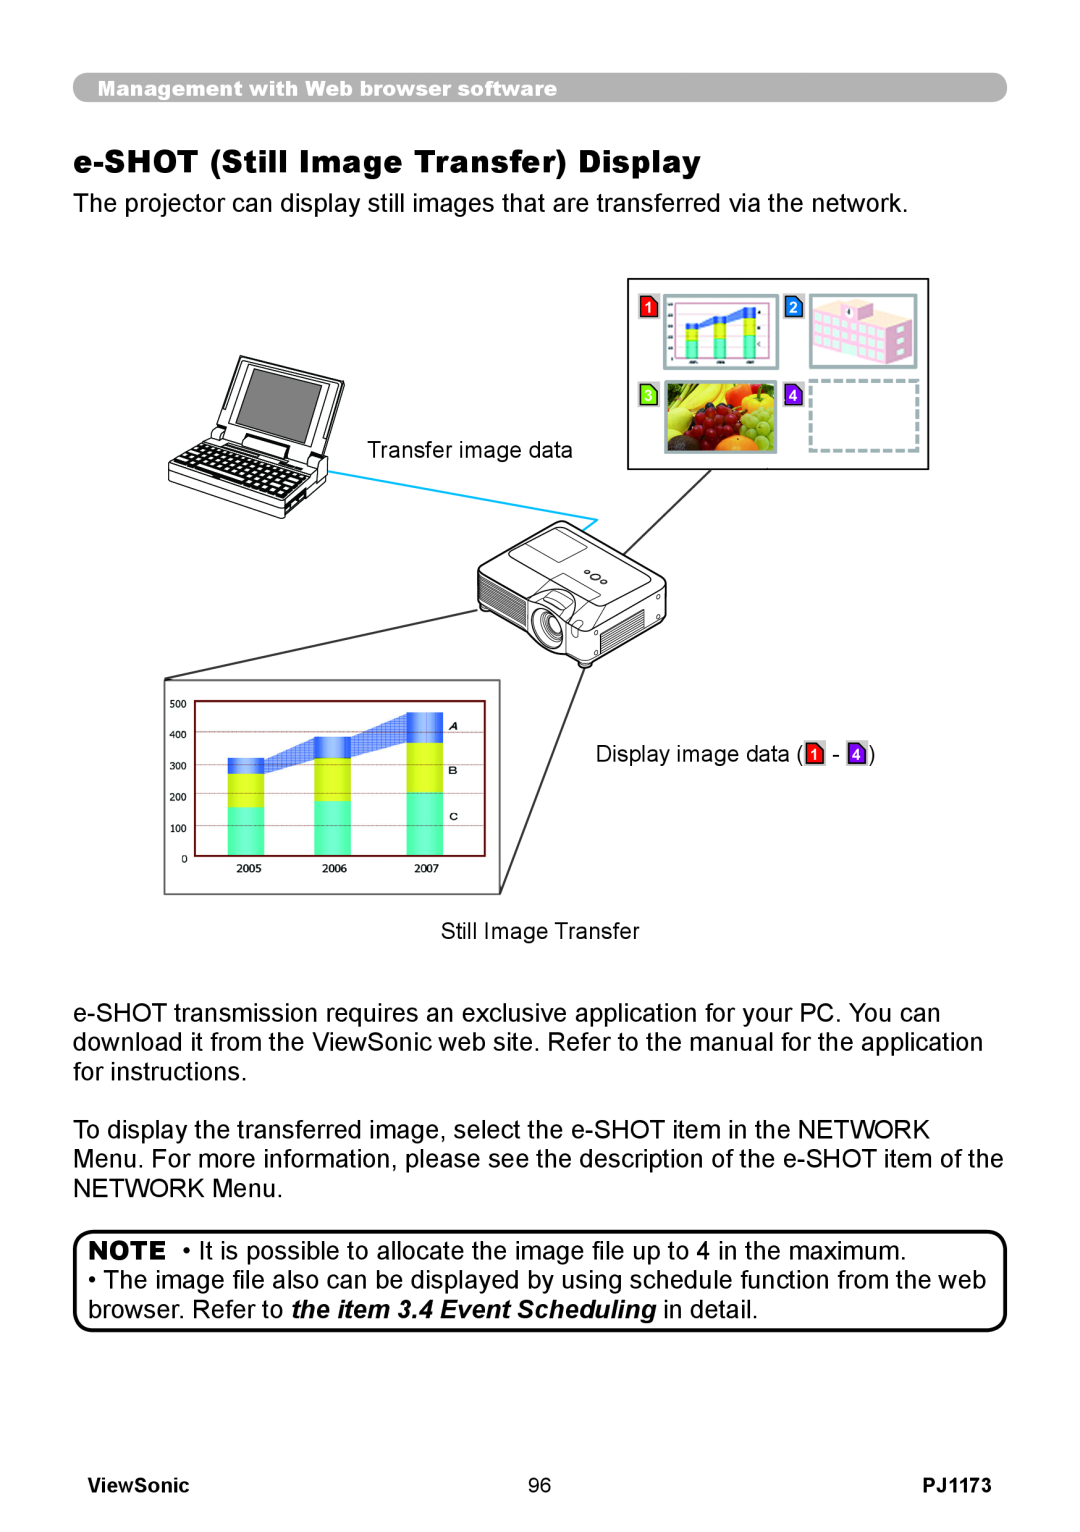 ViewSonic PJ1173, VS12109 warranty e-SHOTStill Image Transfer Display, Transfer image data Display image data 1 